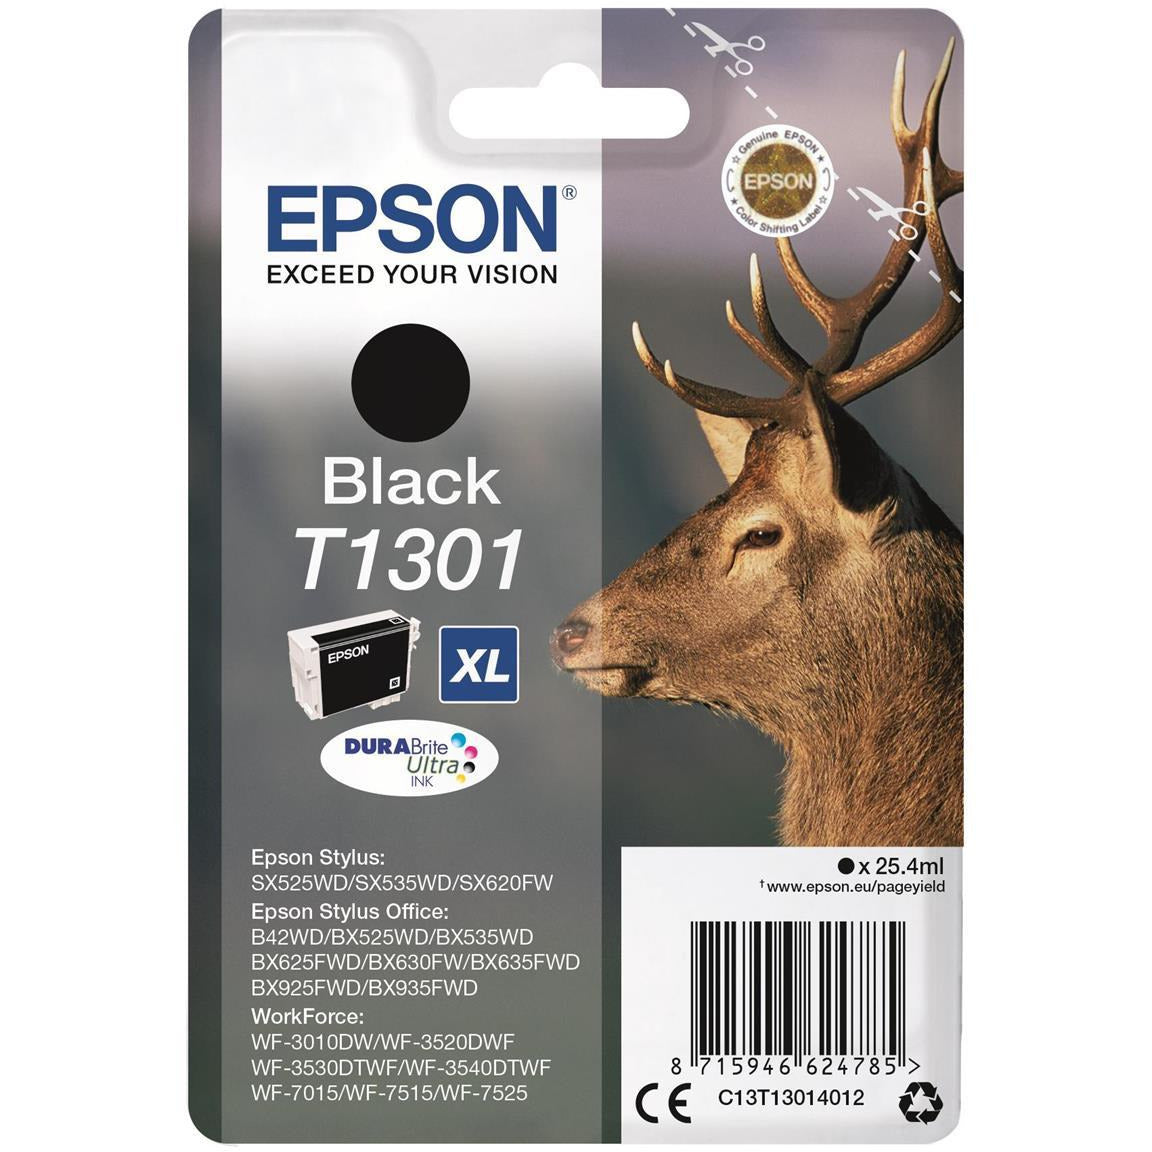 Epson T1301 svart blekhylki (Retail Packed, Untagged) fyrir Stylus Office BX525WD/BX625FWD/Stylus SX525WD/SX620FW